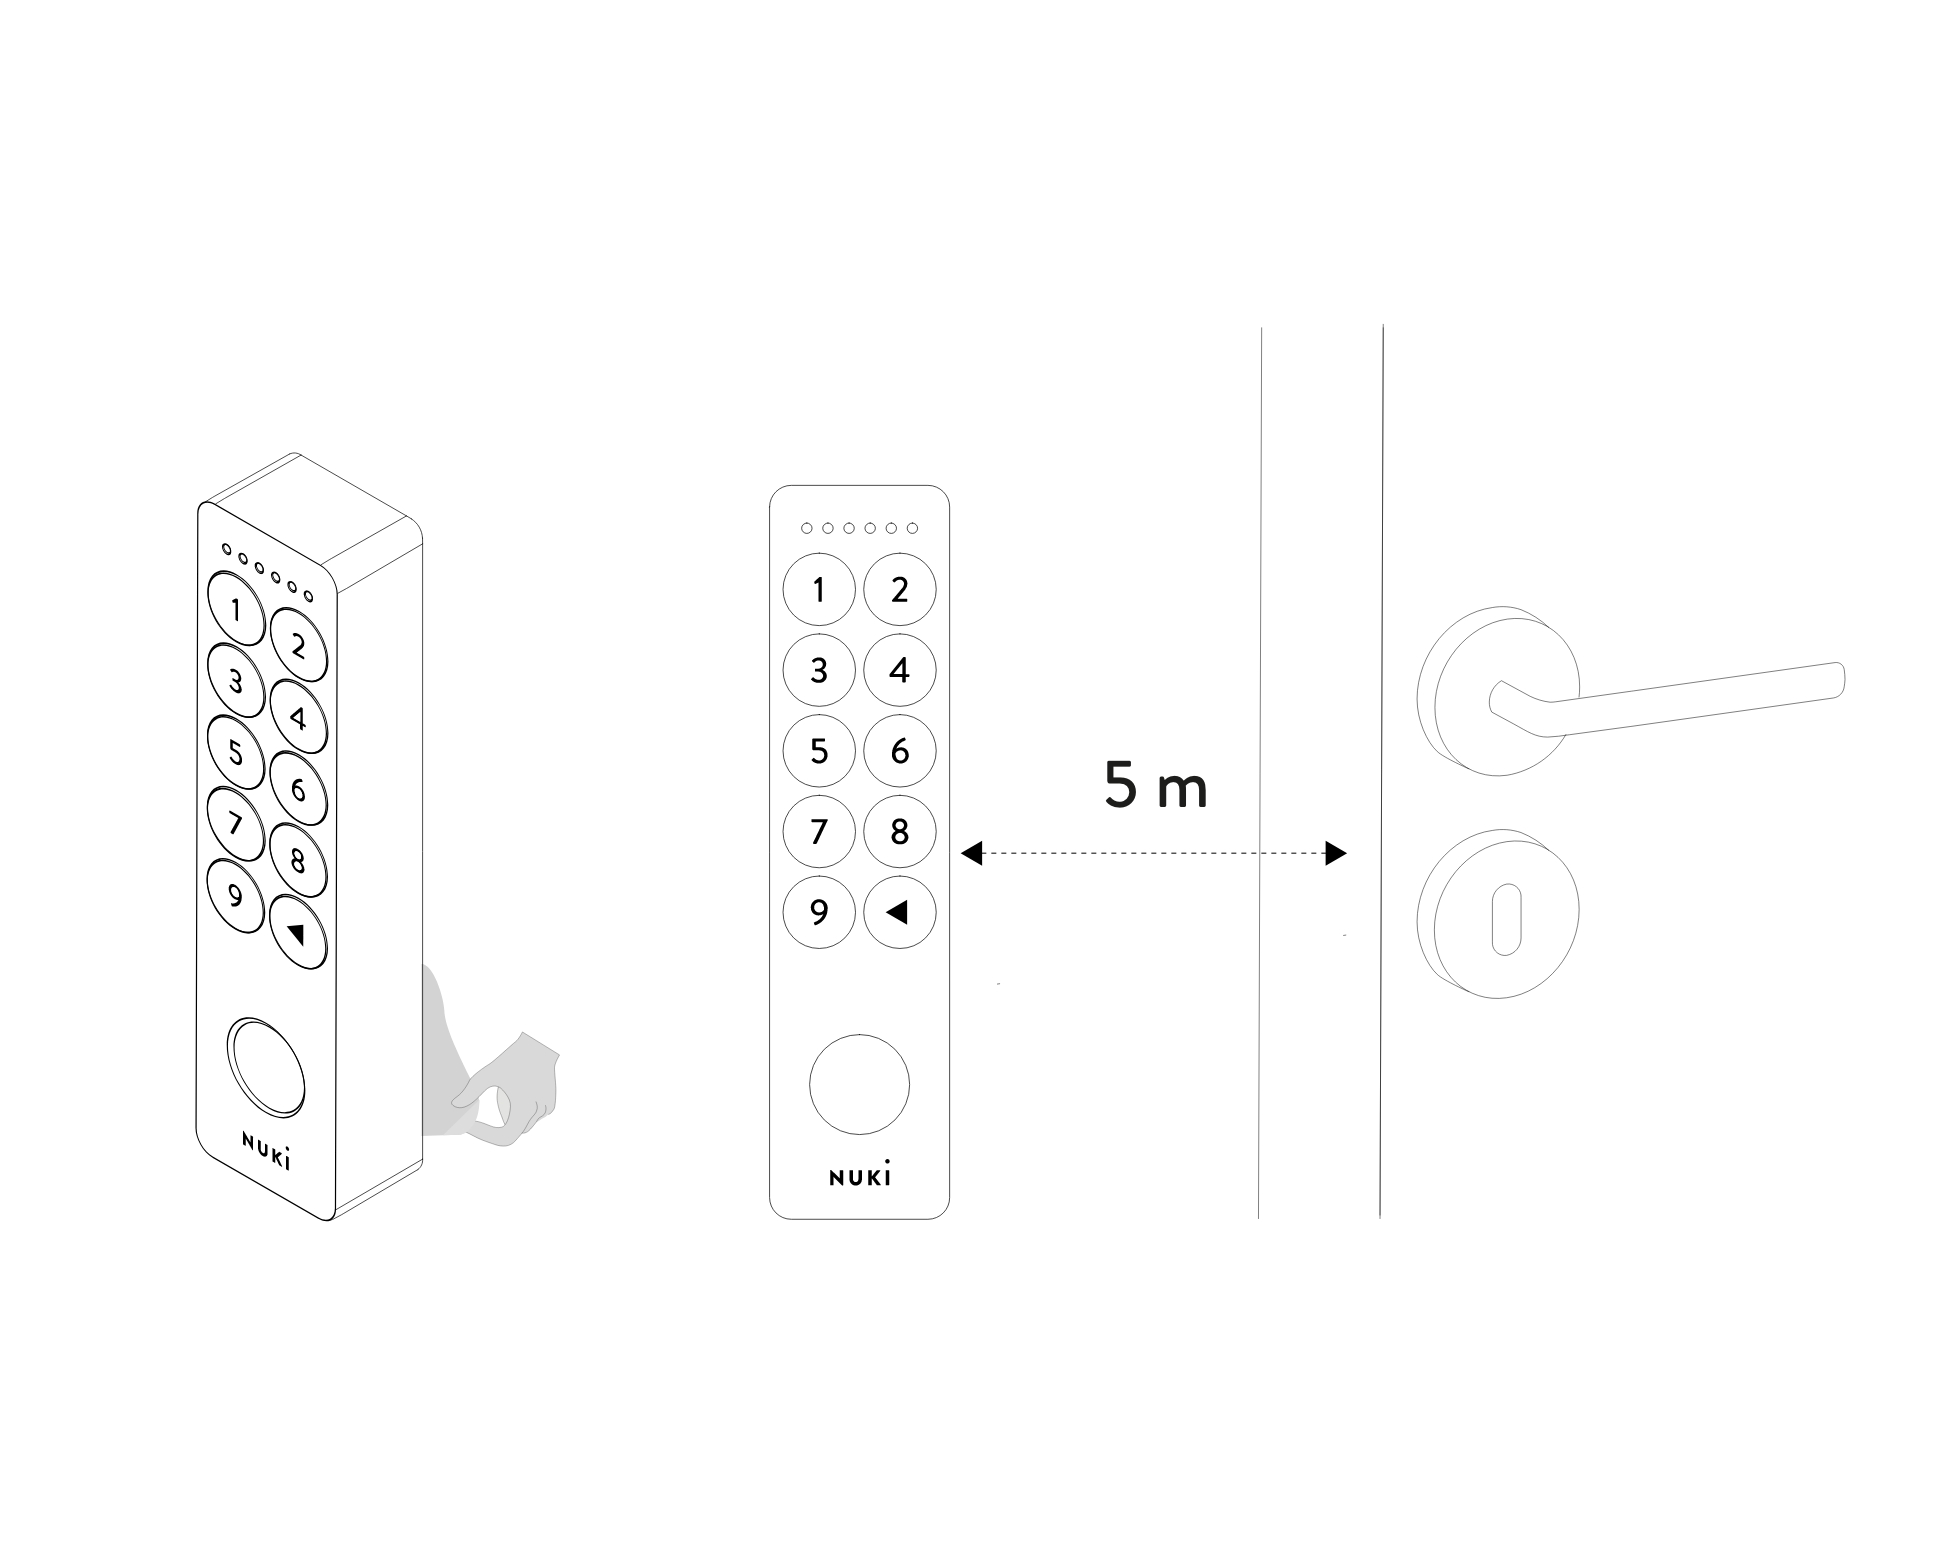 Nuki: Keypad & Keypad 2.0 compared (and use for rental homes, airbnb,) 